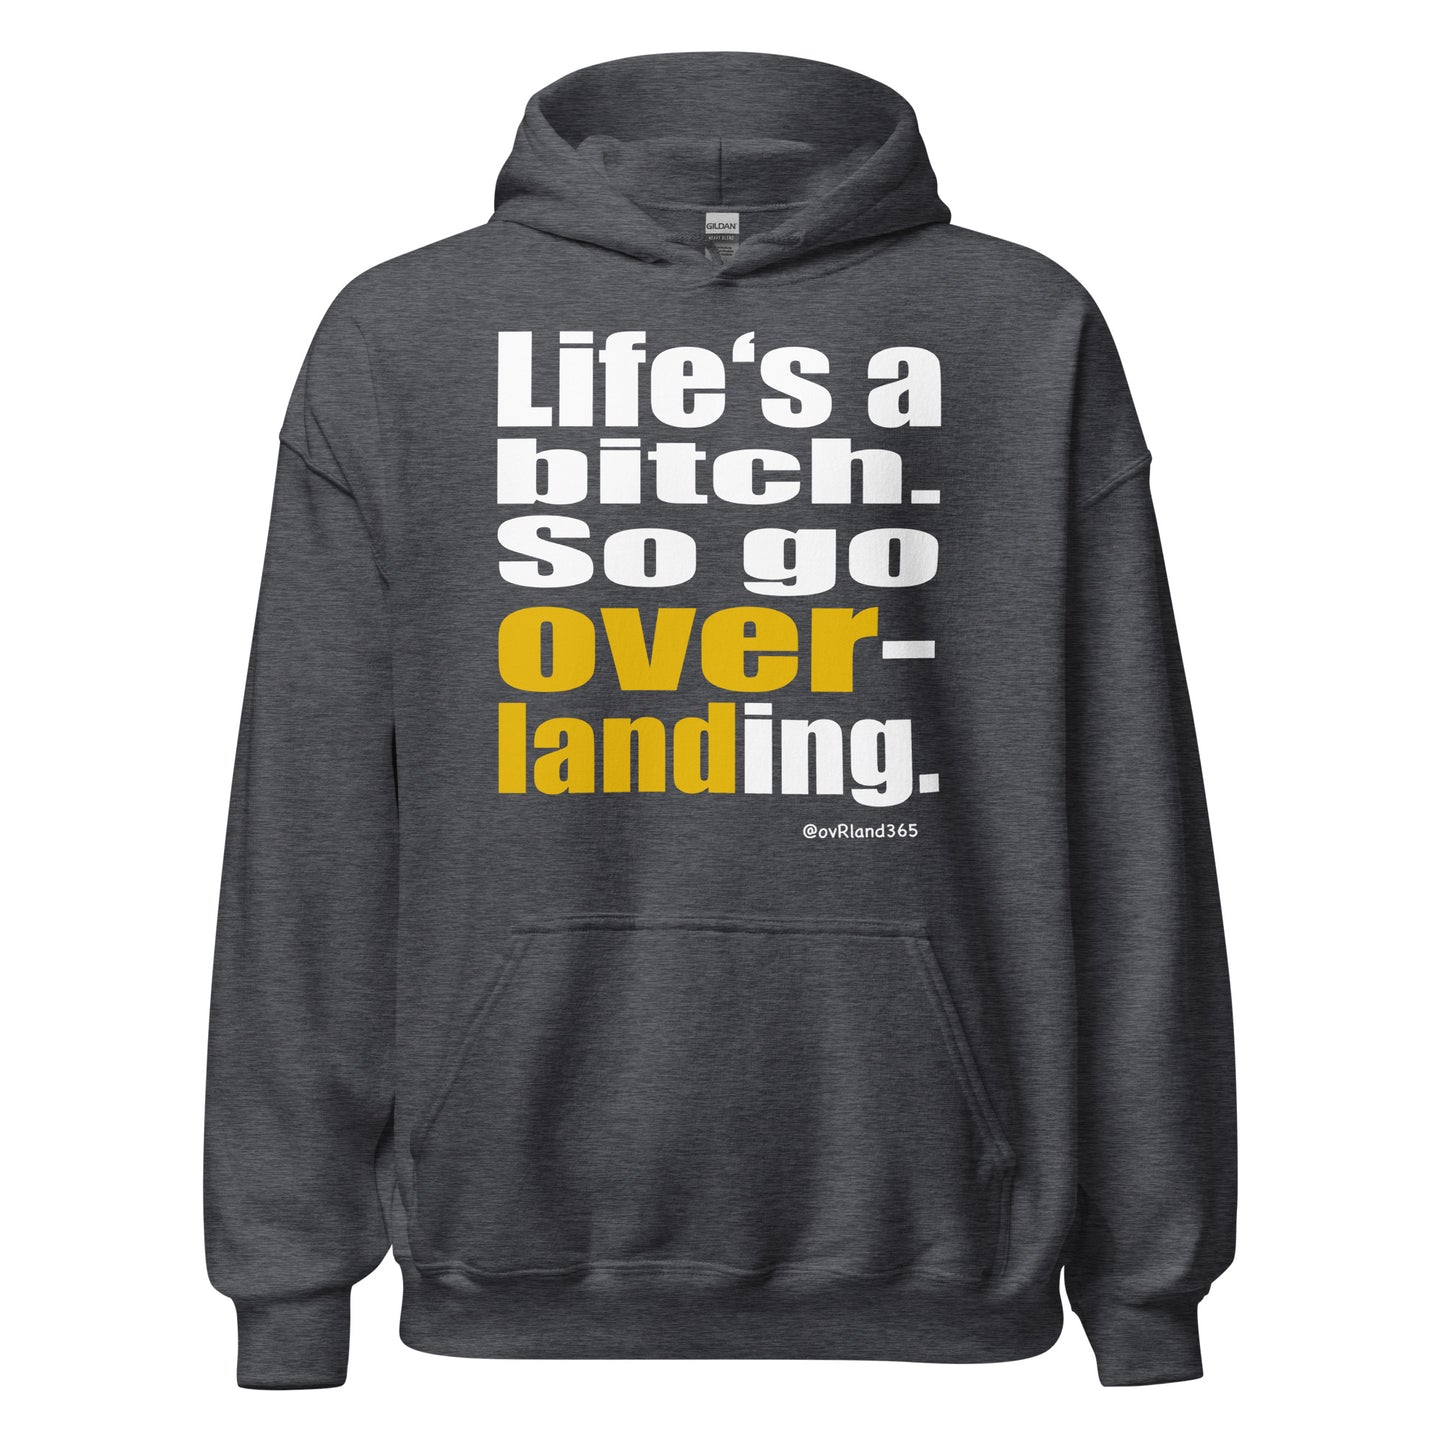 "Life's a bitch. So go overlanding." Dark grey hoodie. overland365.com